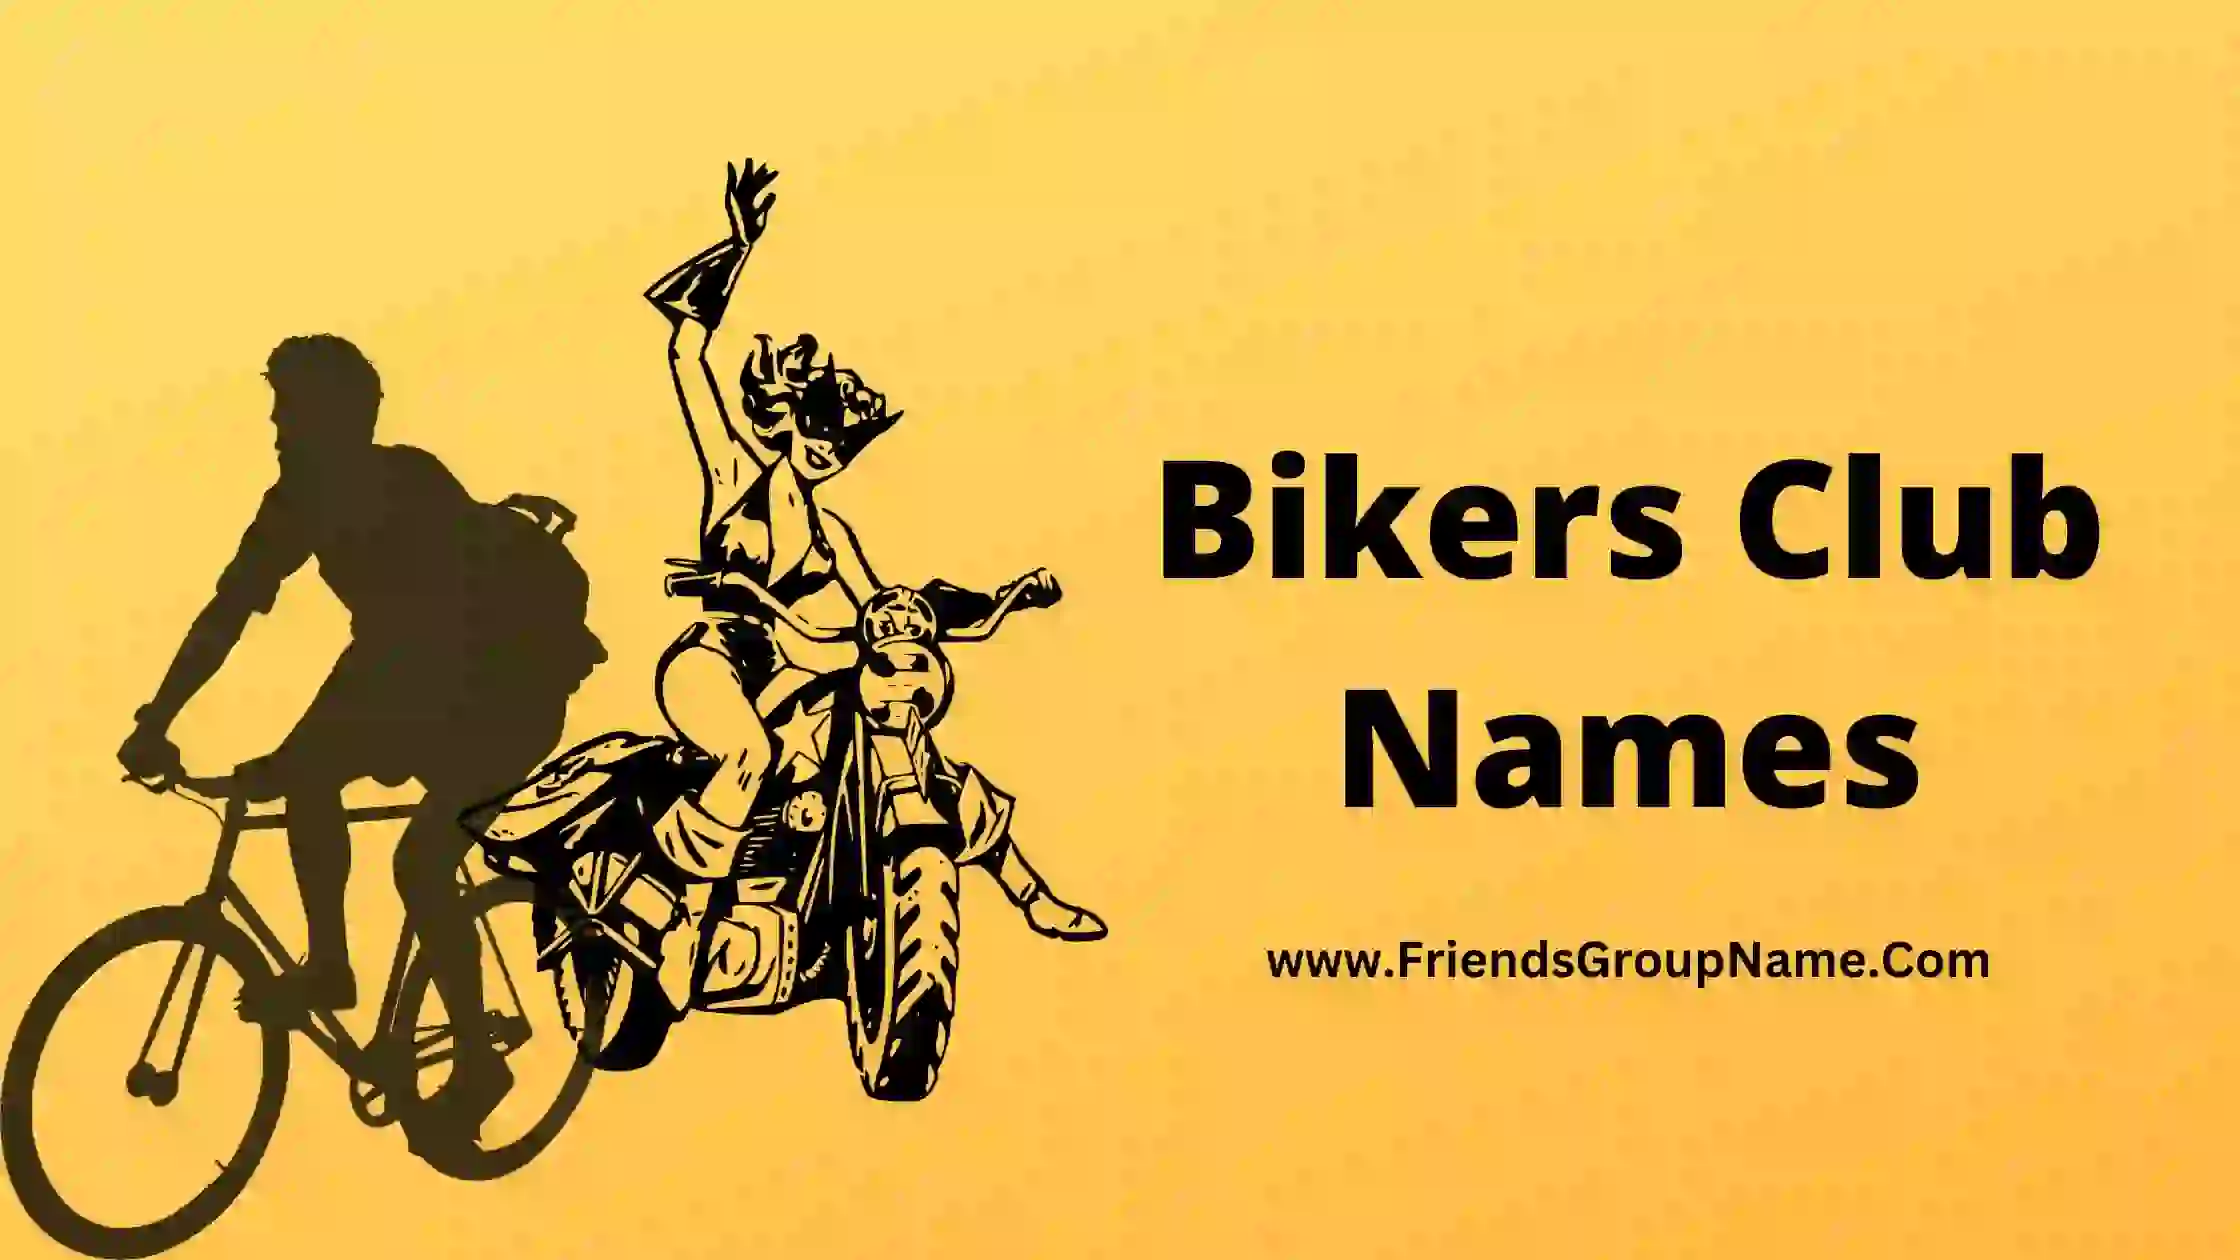 Bikers Club Names